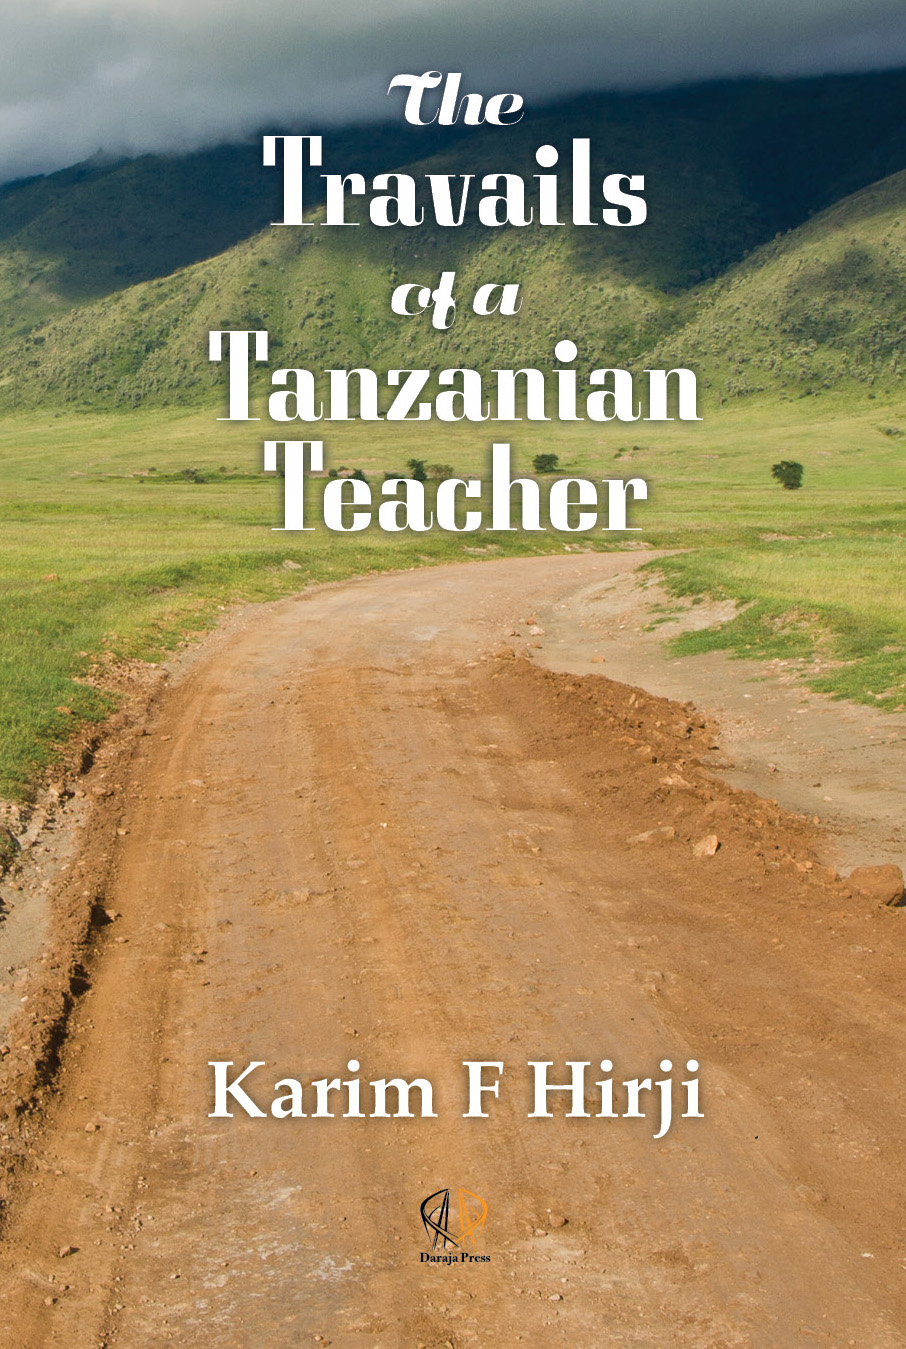 The Travails of a Tanzanian Teacher By Karim Hirji receives high praise